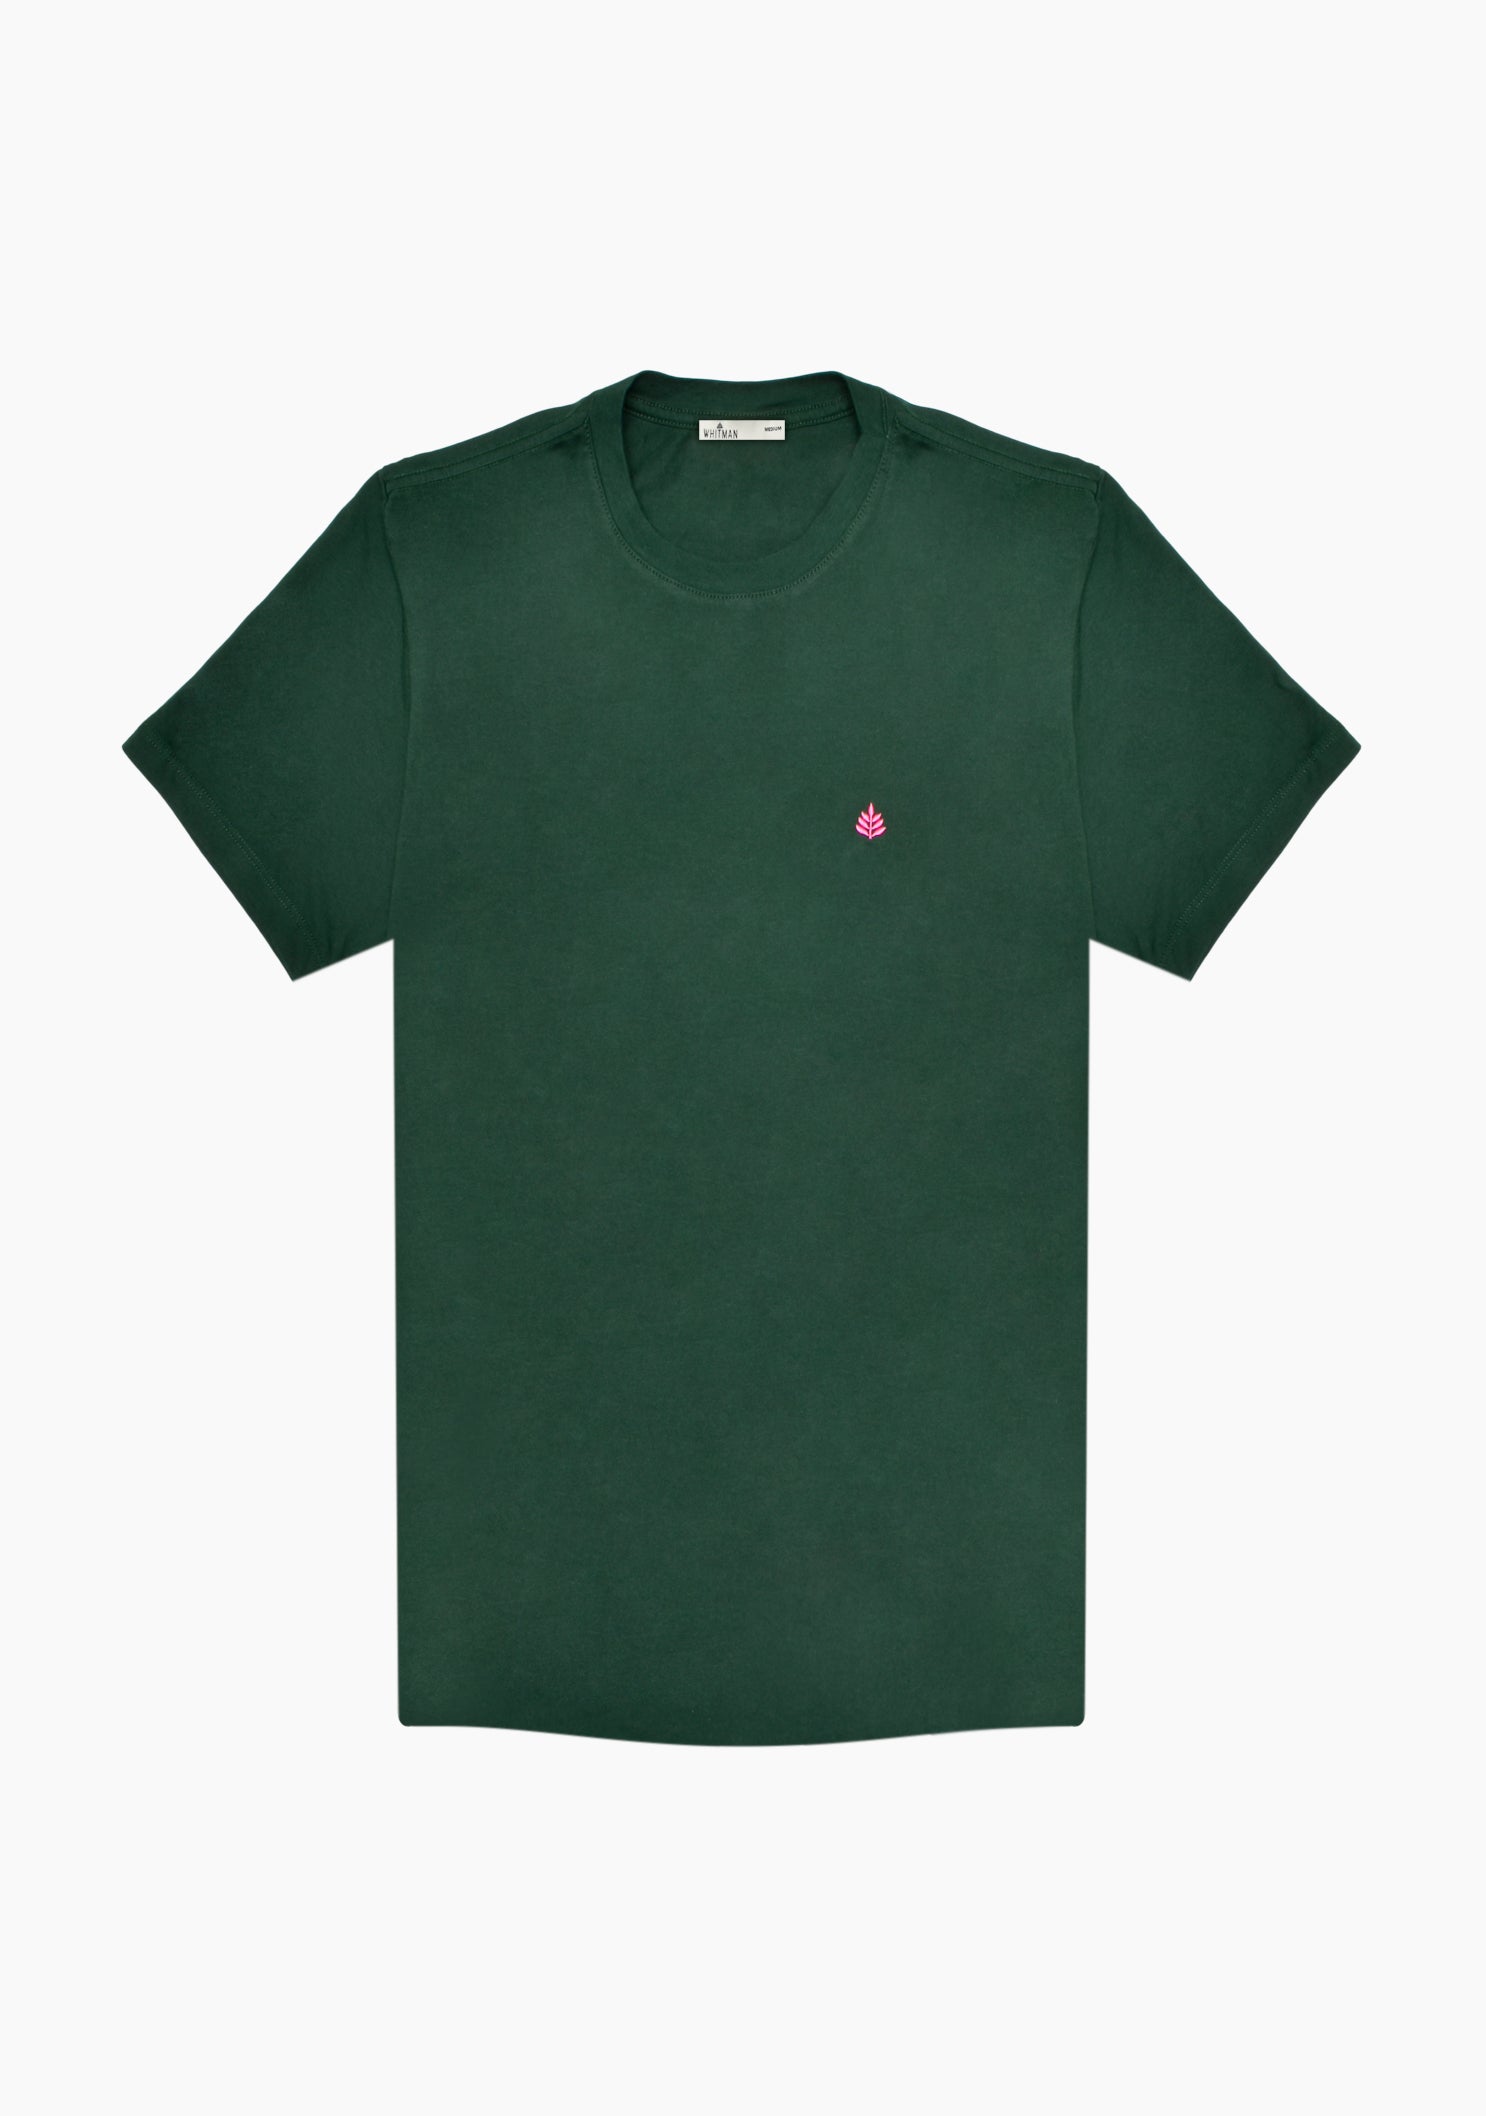 Camiseta Verde Osc